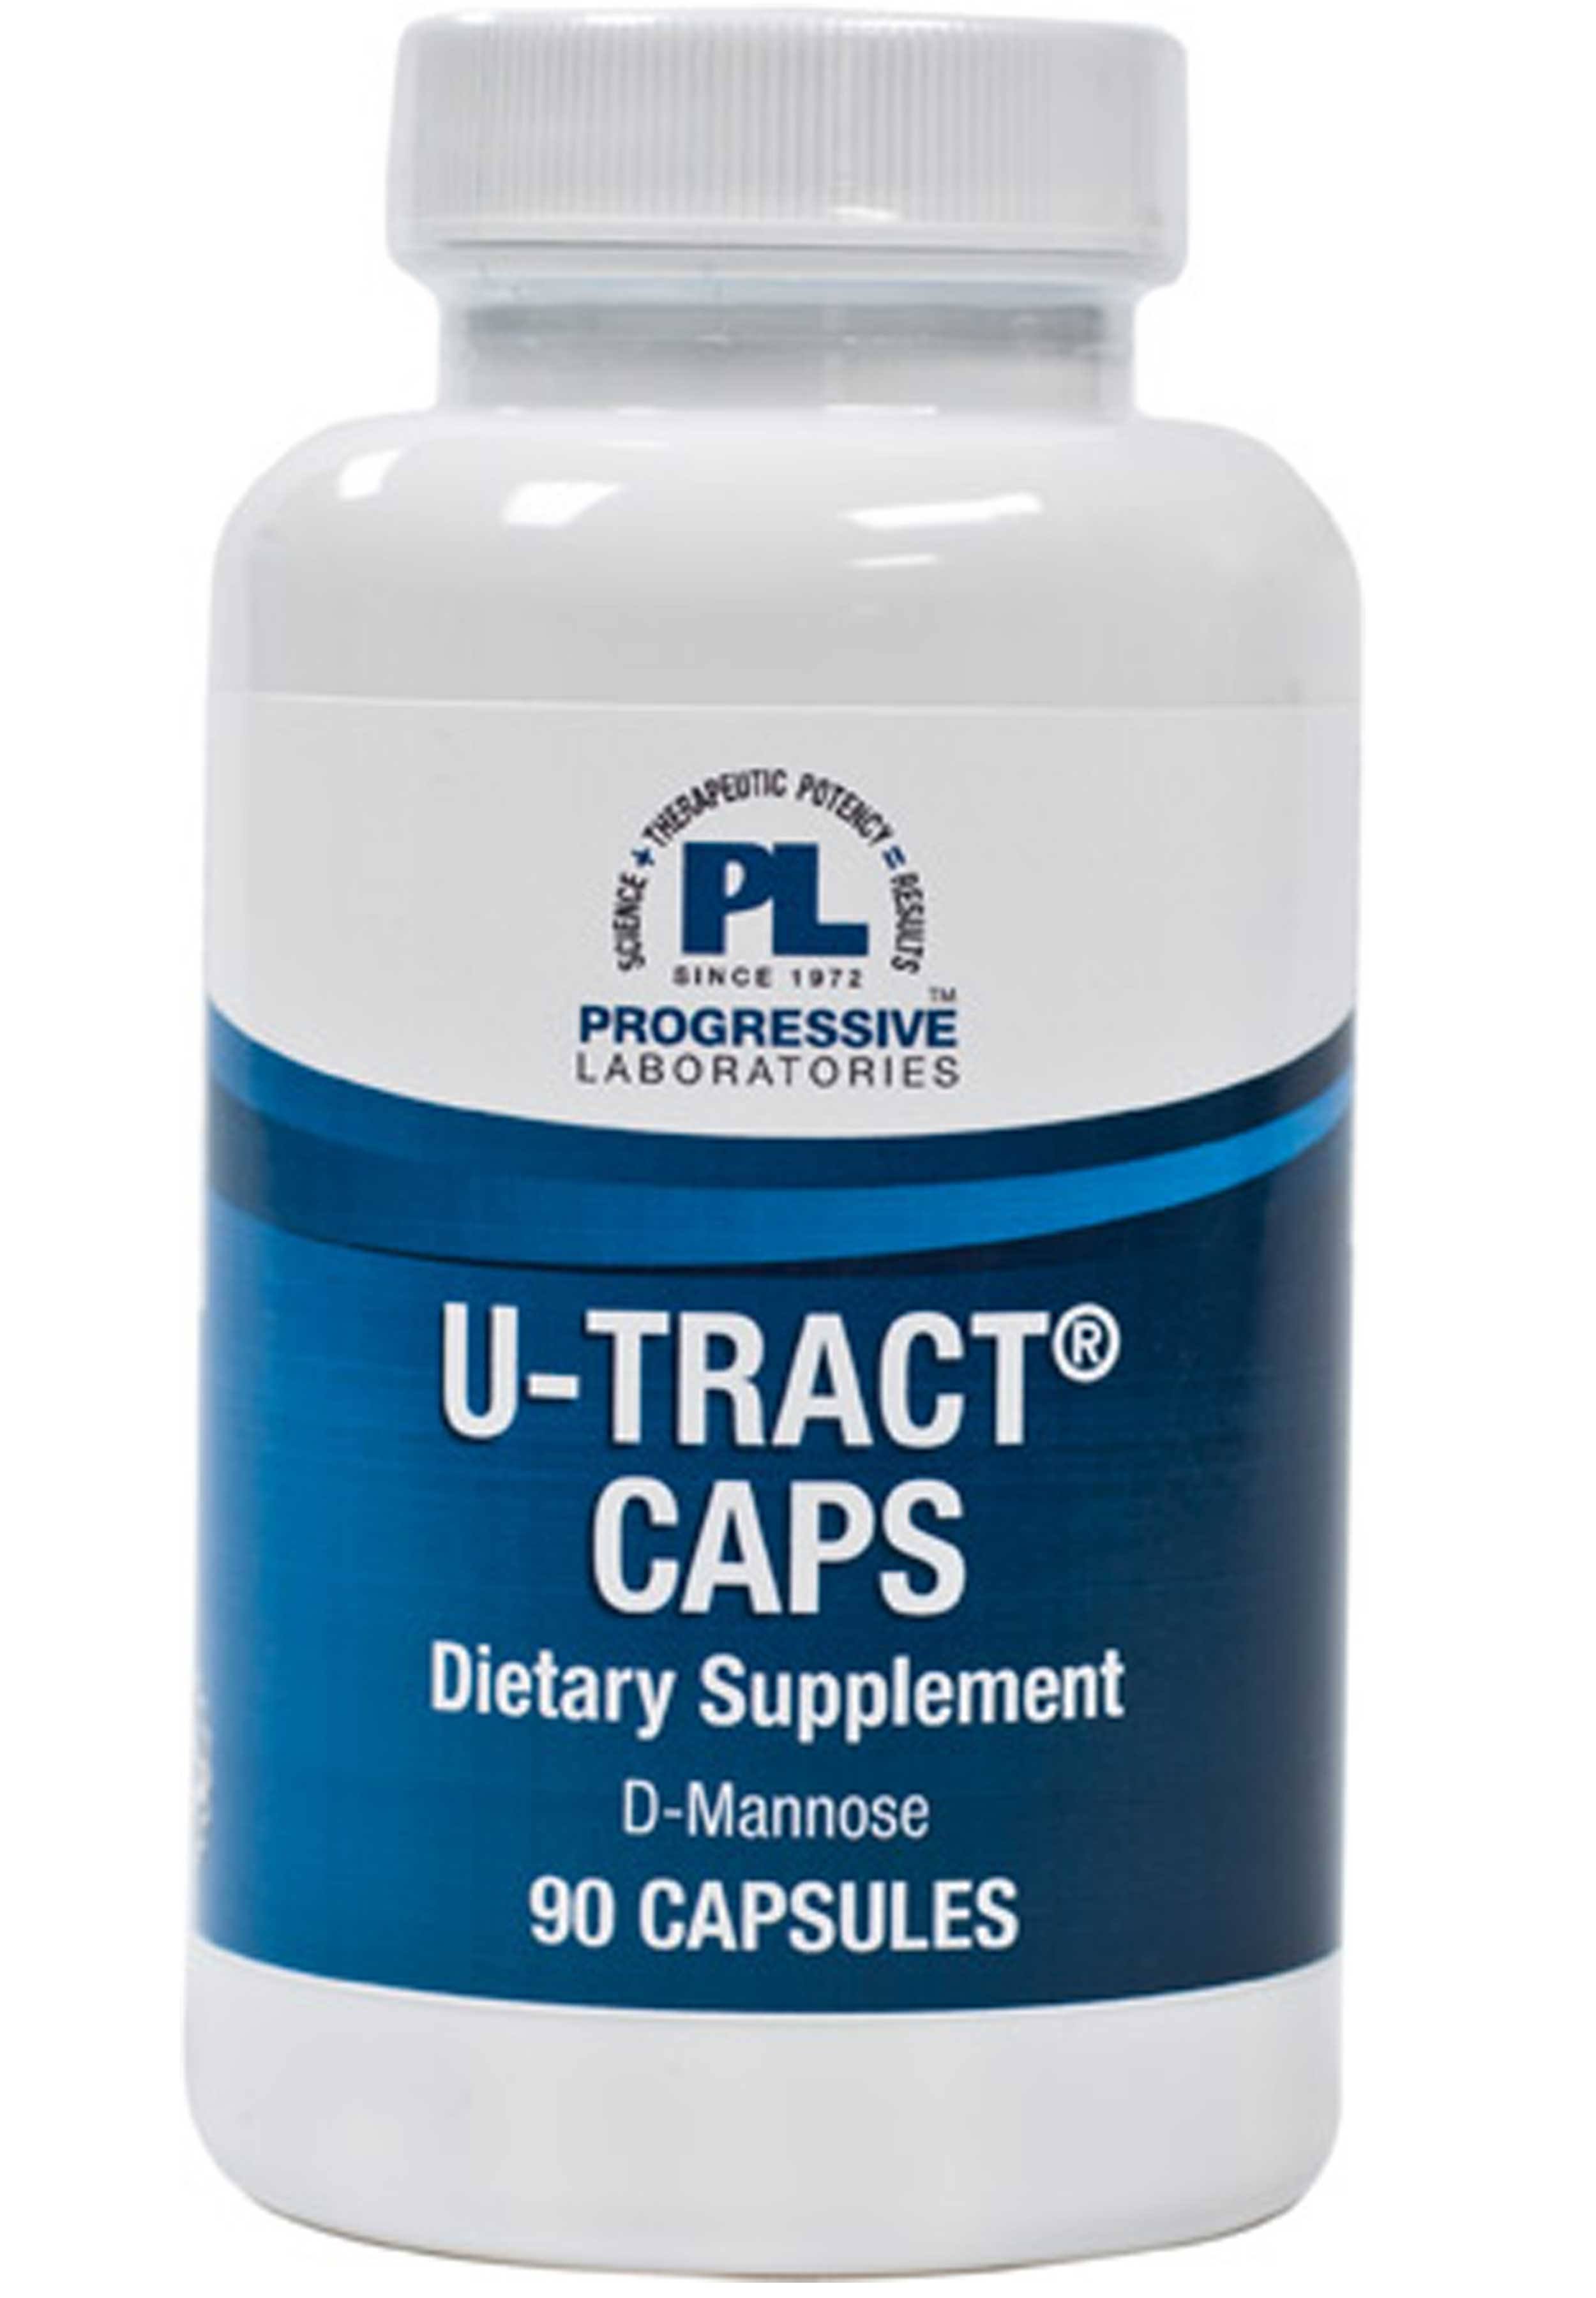 Progressive Labs U-Tract Caps Dietary Supplement - 90 Capsules